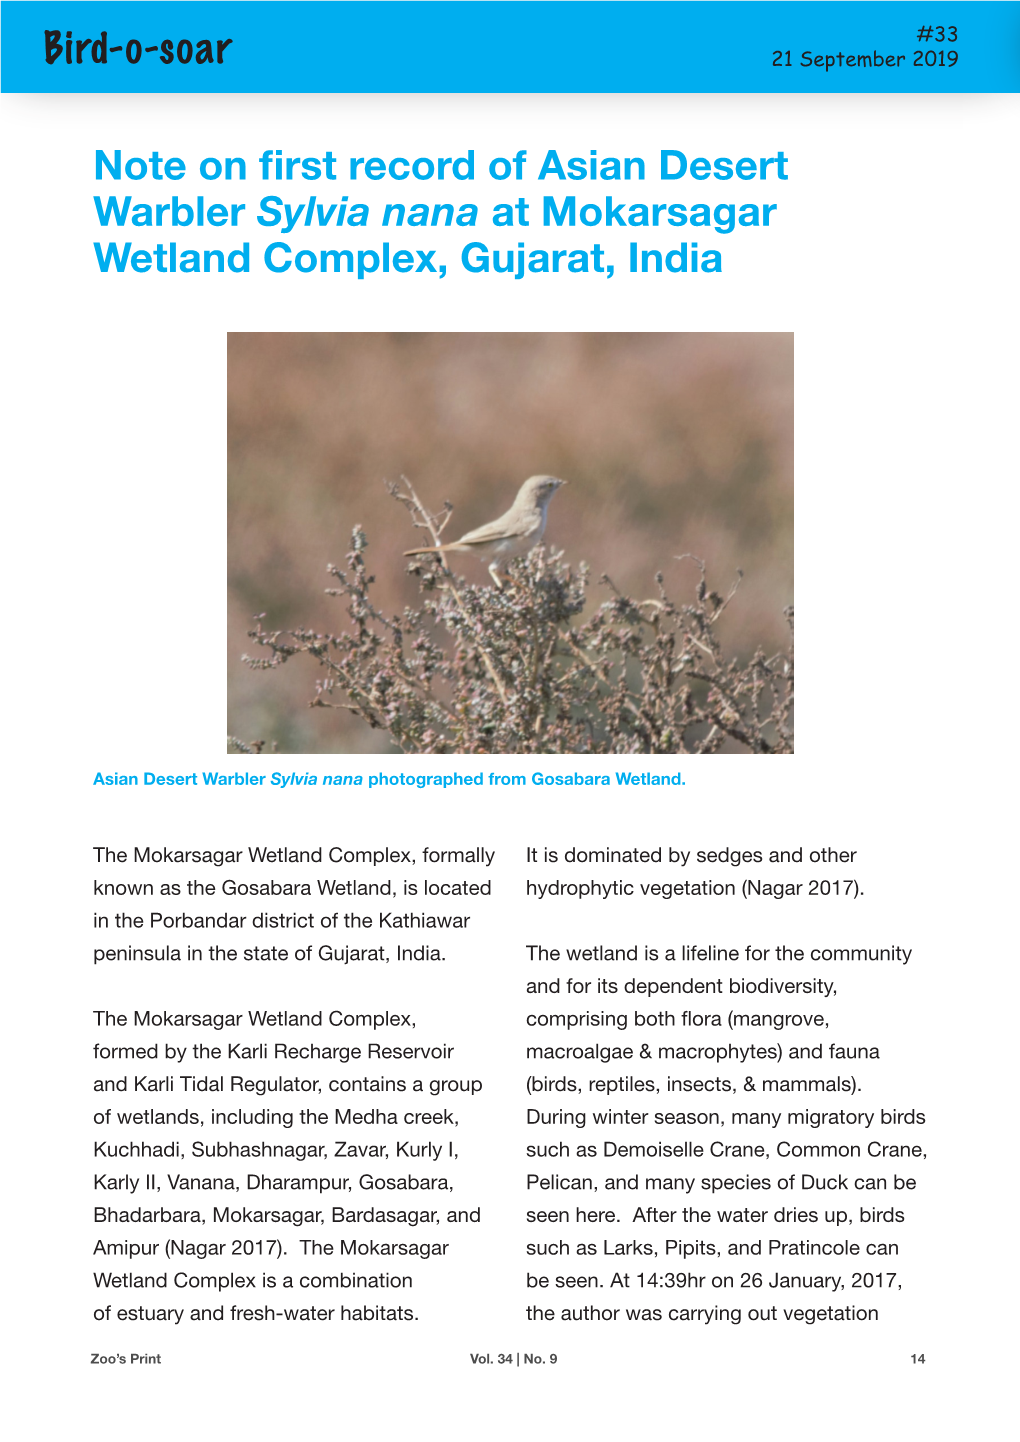 Bird-O-Soar Note on First Record of Asian Desert Warbler Sylvia Nana at Mokarsagar Wetland Complex, Gujarat, India